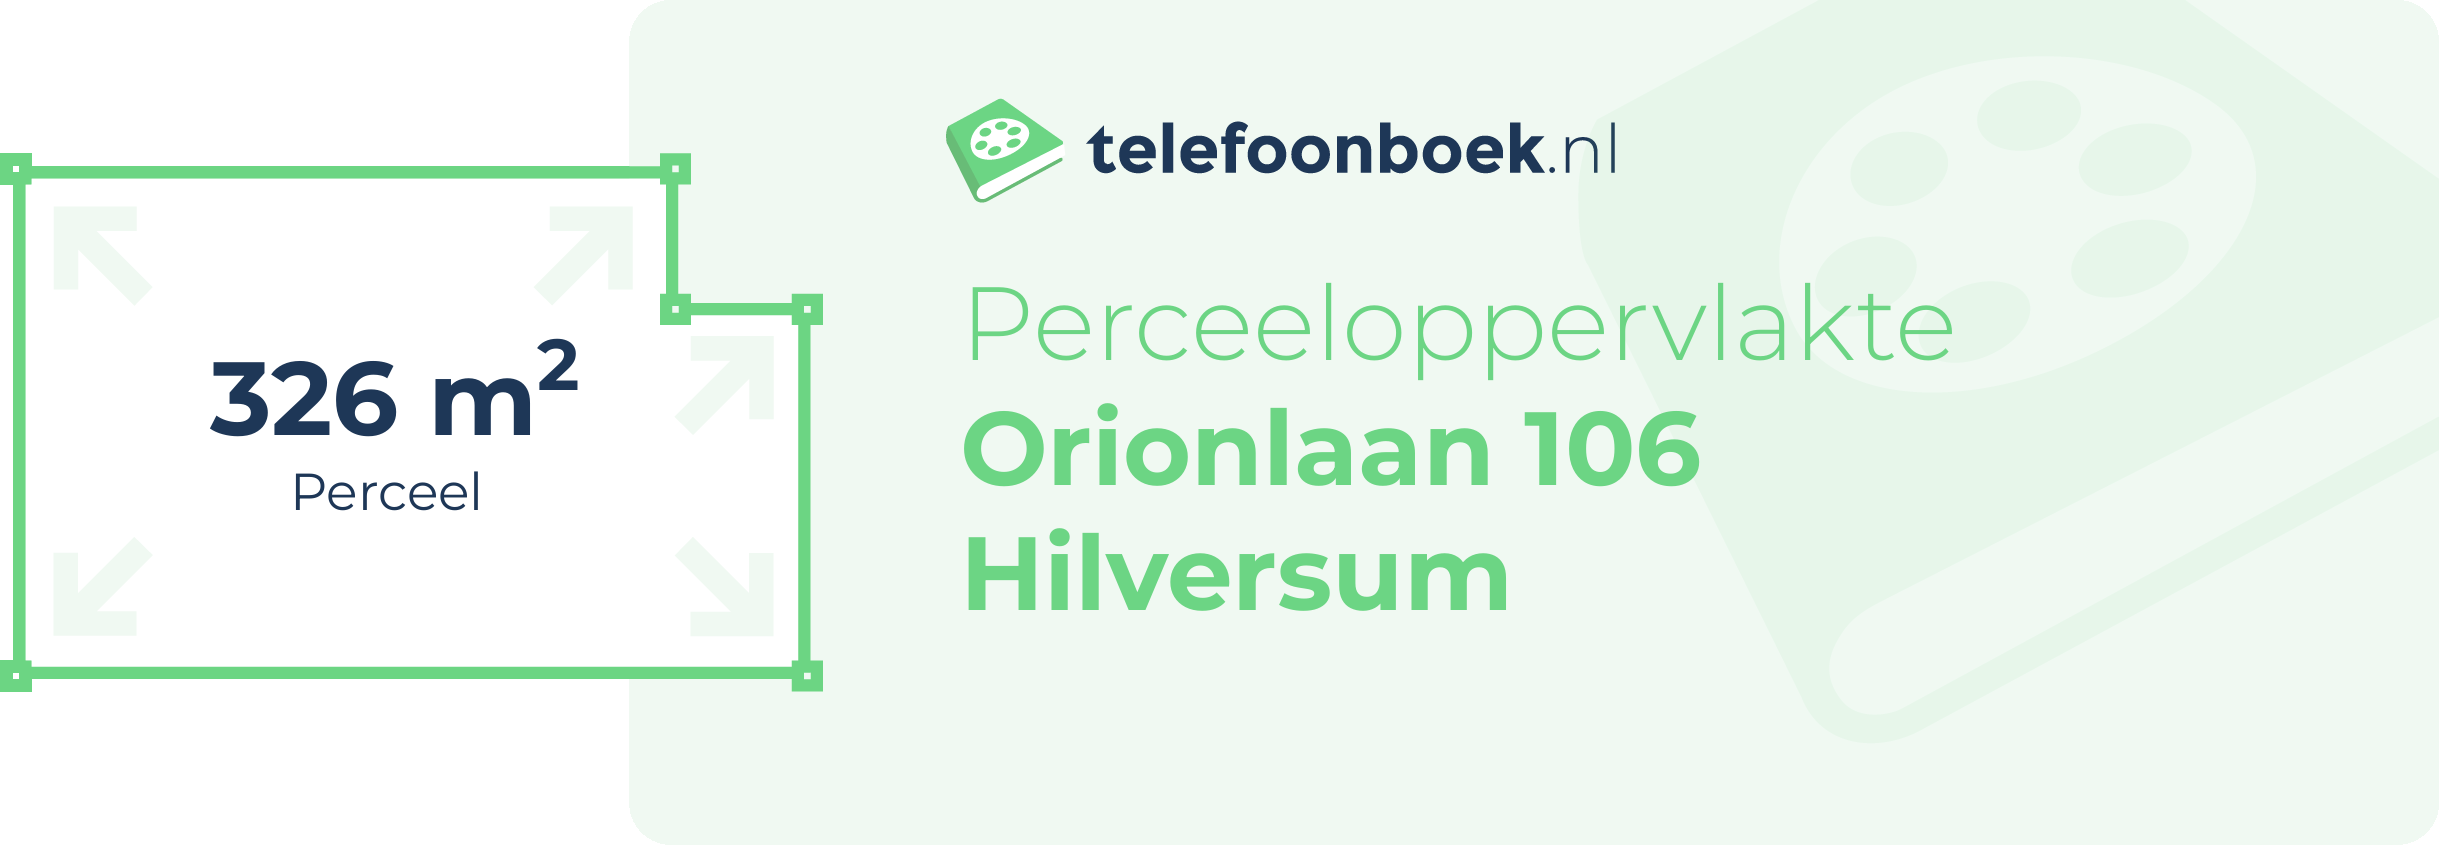 Perceeloppervlakte Orionlaan 106 Hilversum